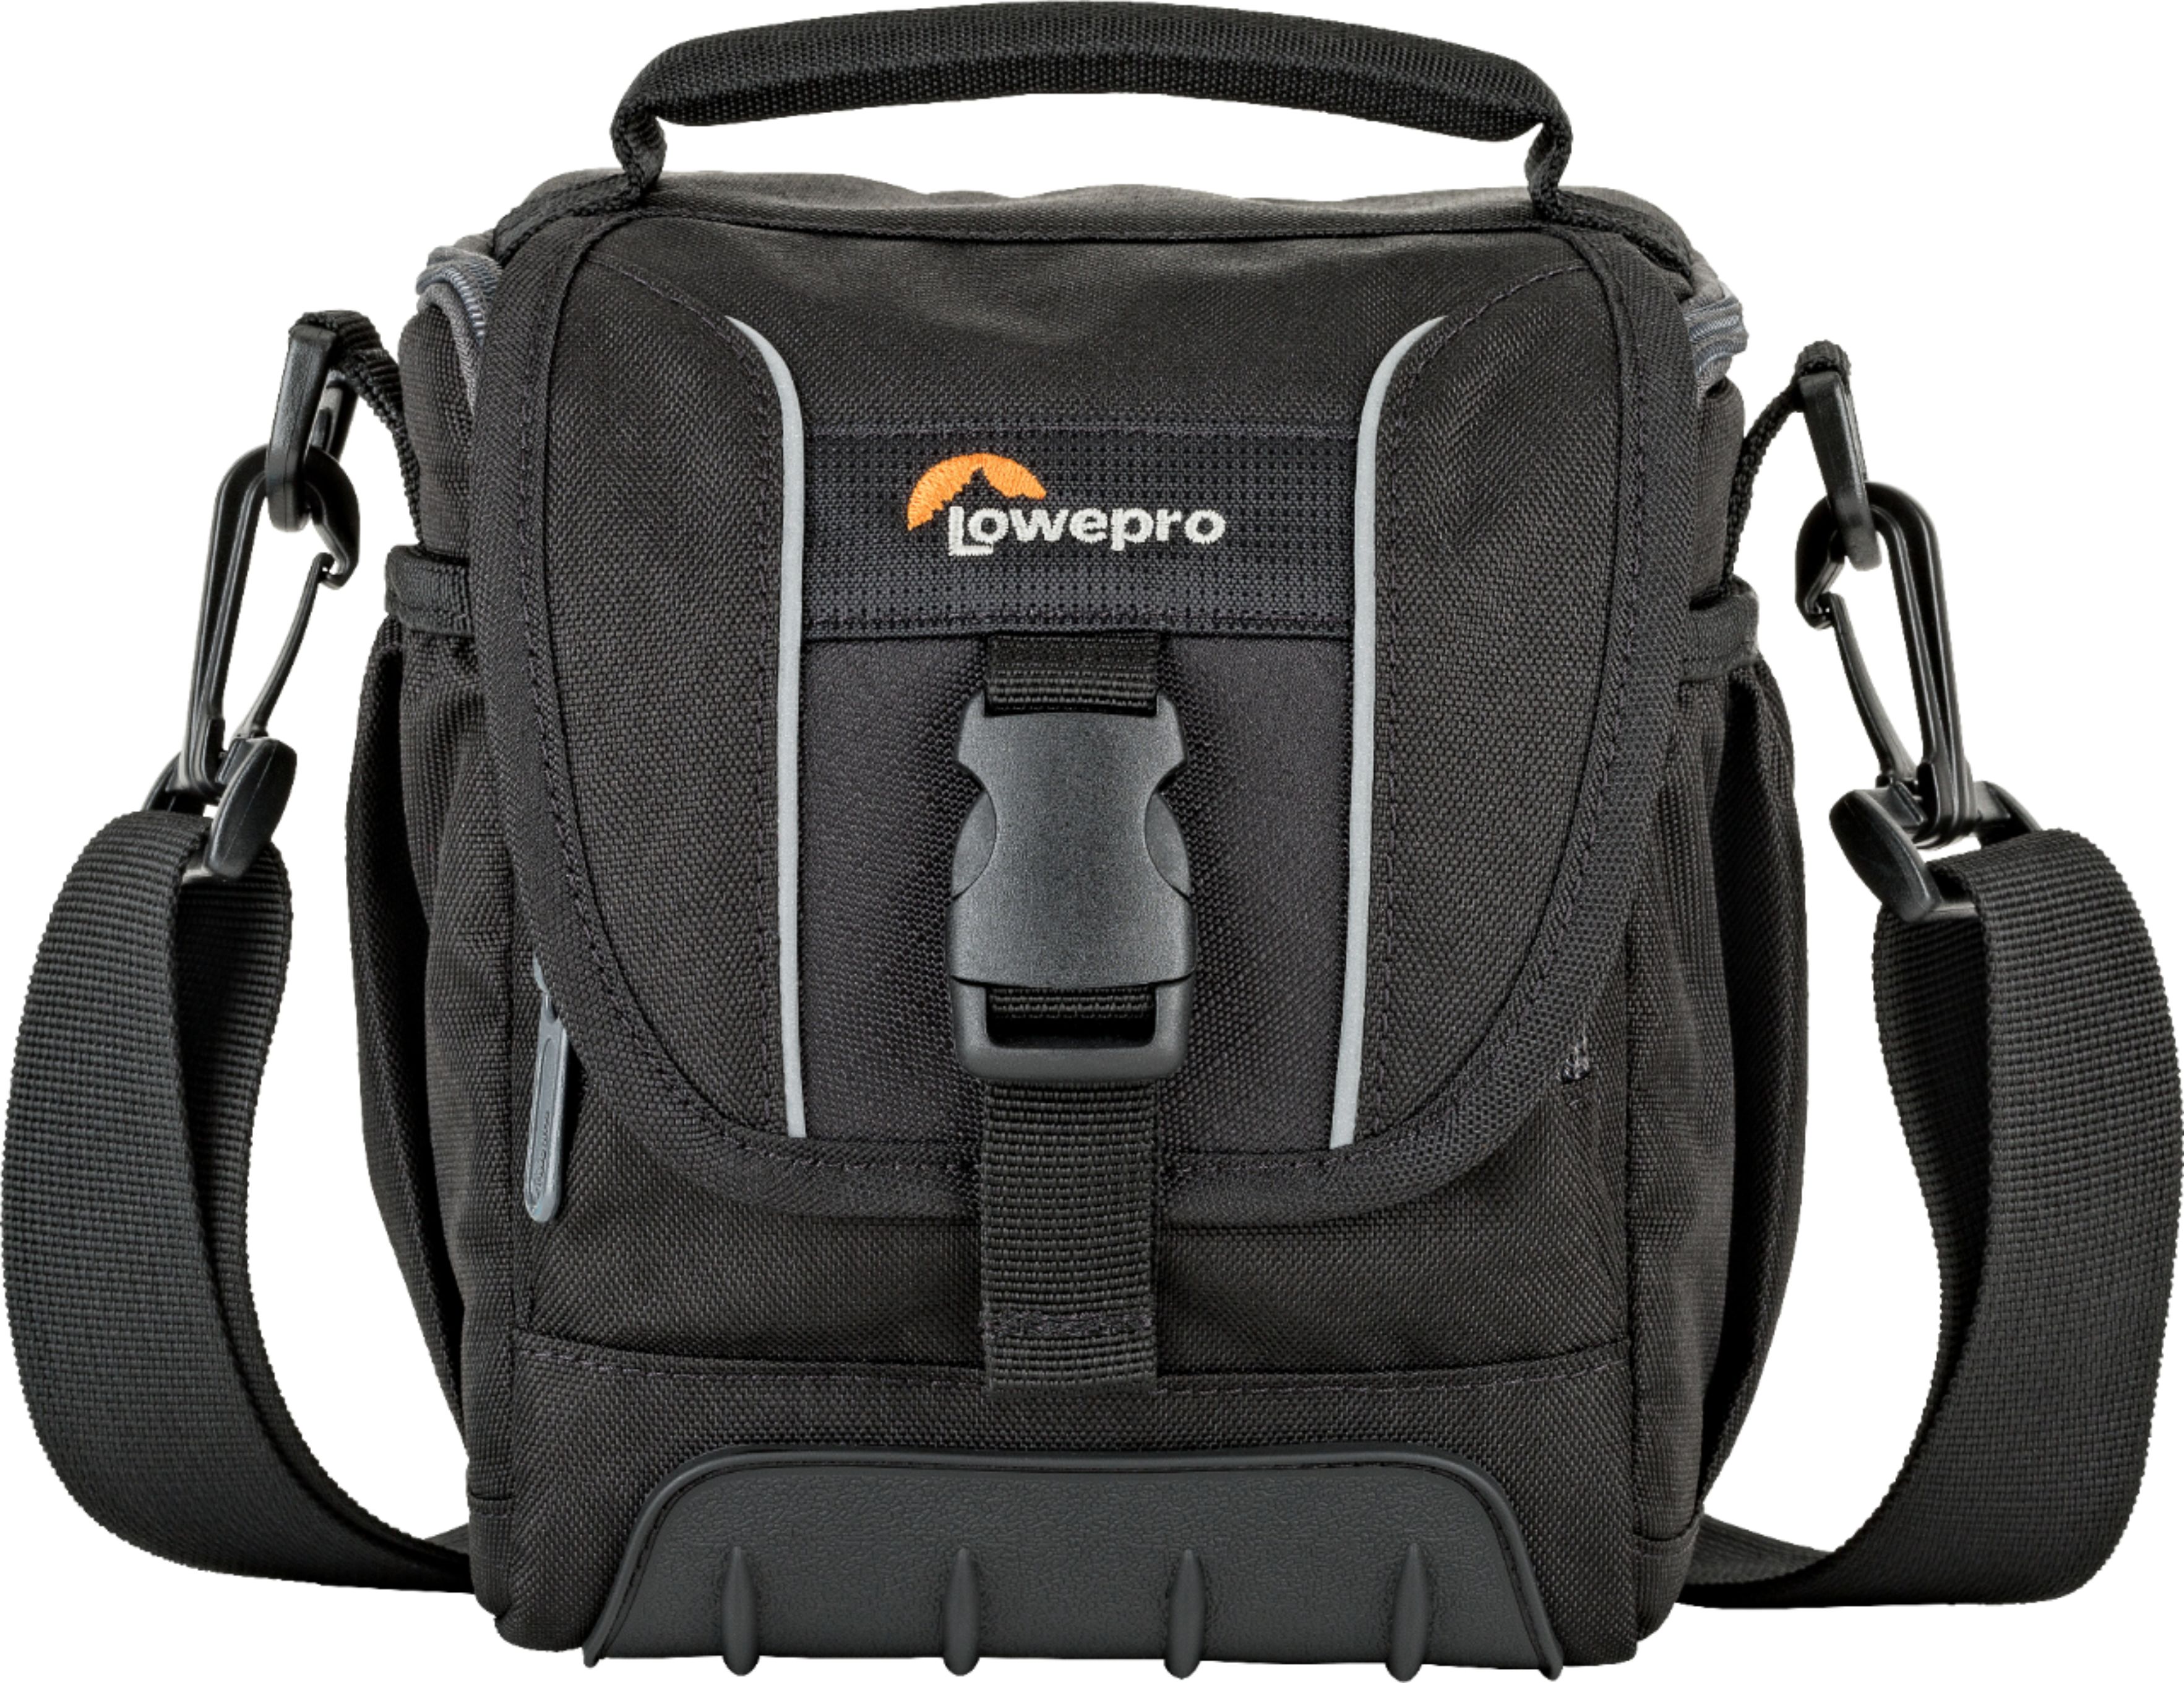 Angle View: Lowepro - Adventura SH 120R II Camera Carrying Bag - Black